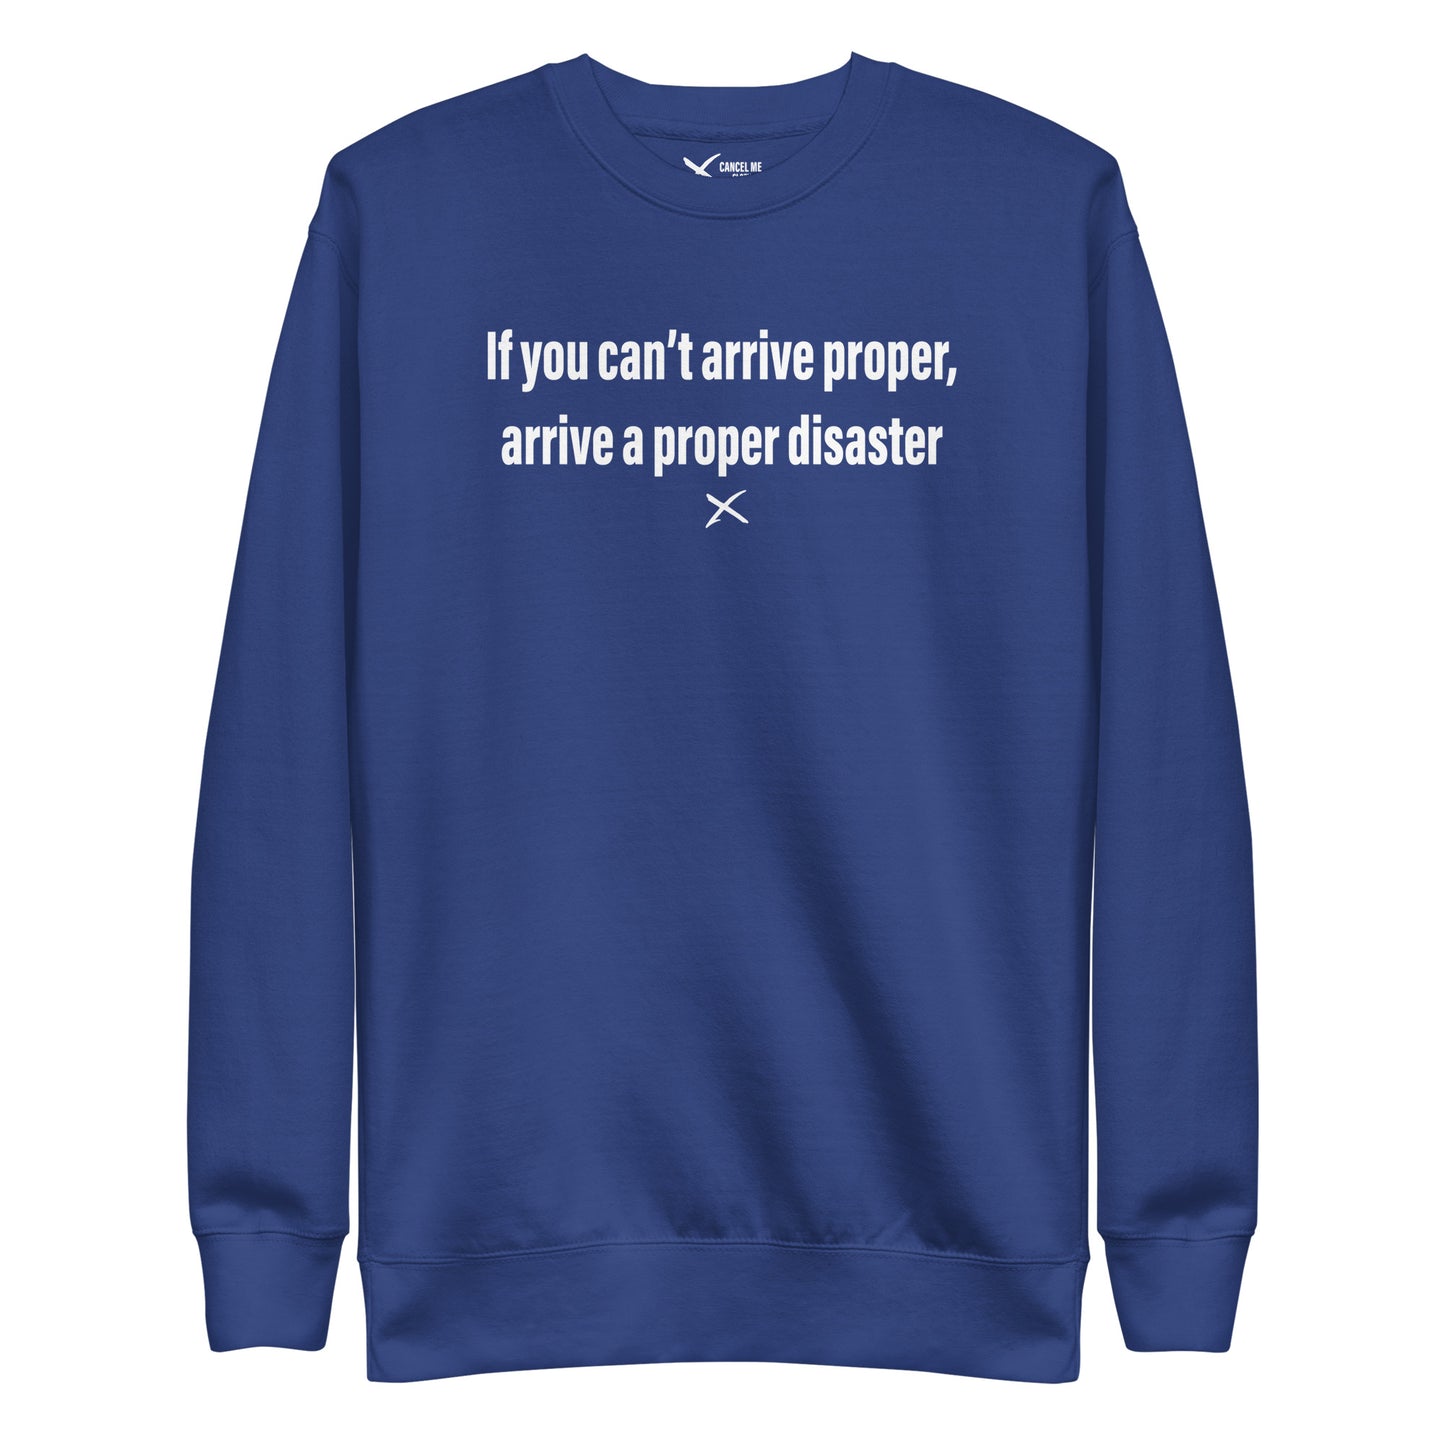 If you can't arrive proper, arrive a proper disaster - Sweatshirt